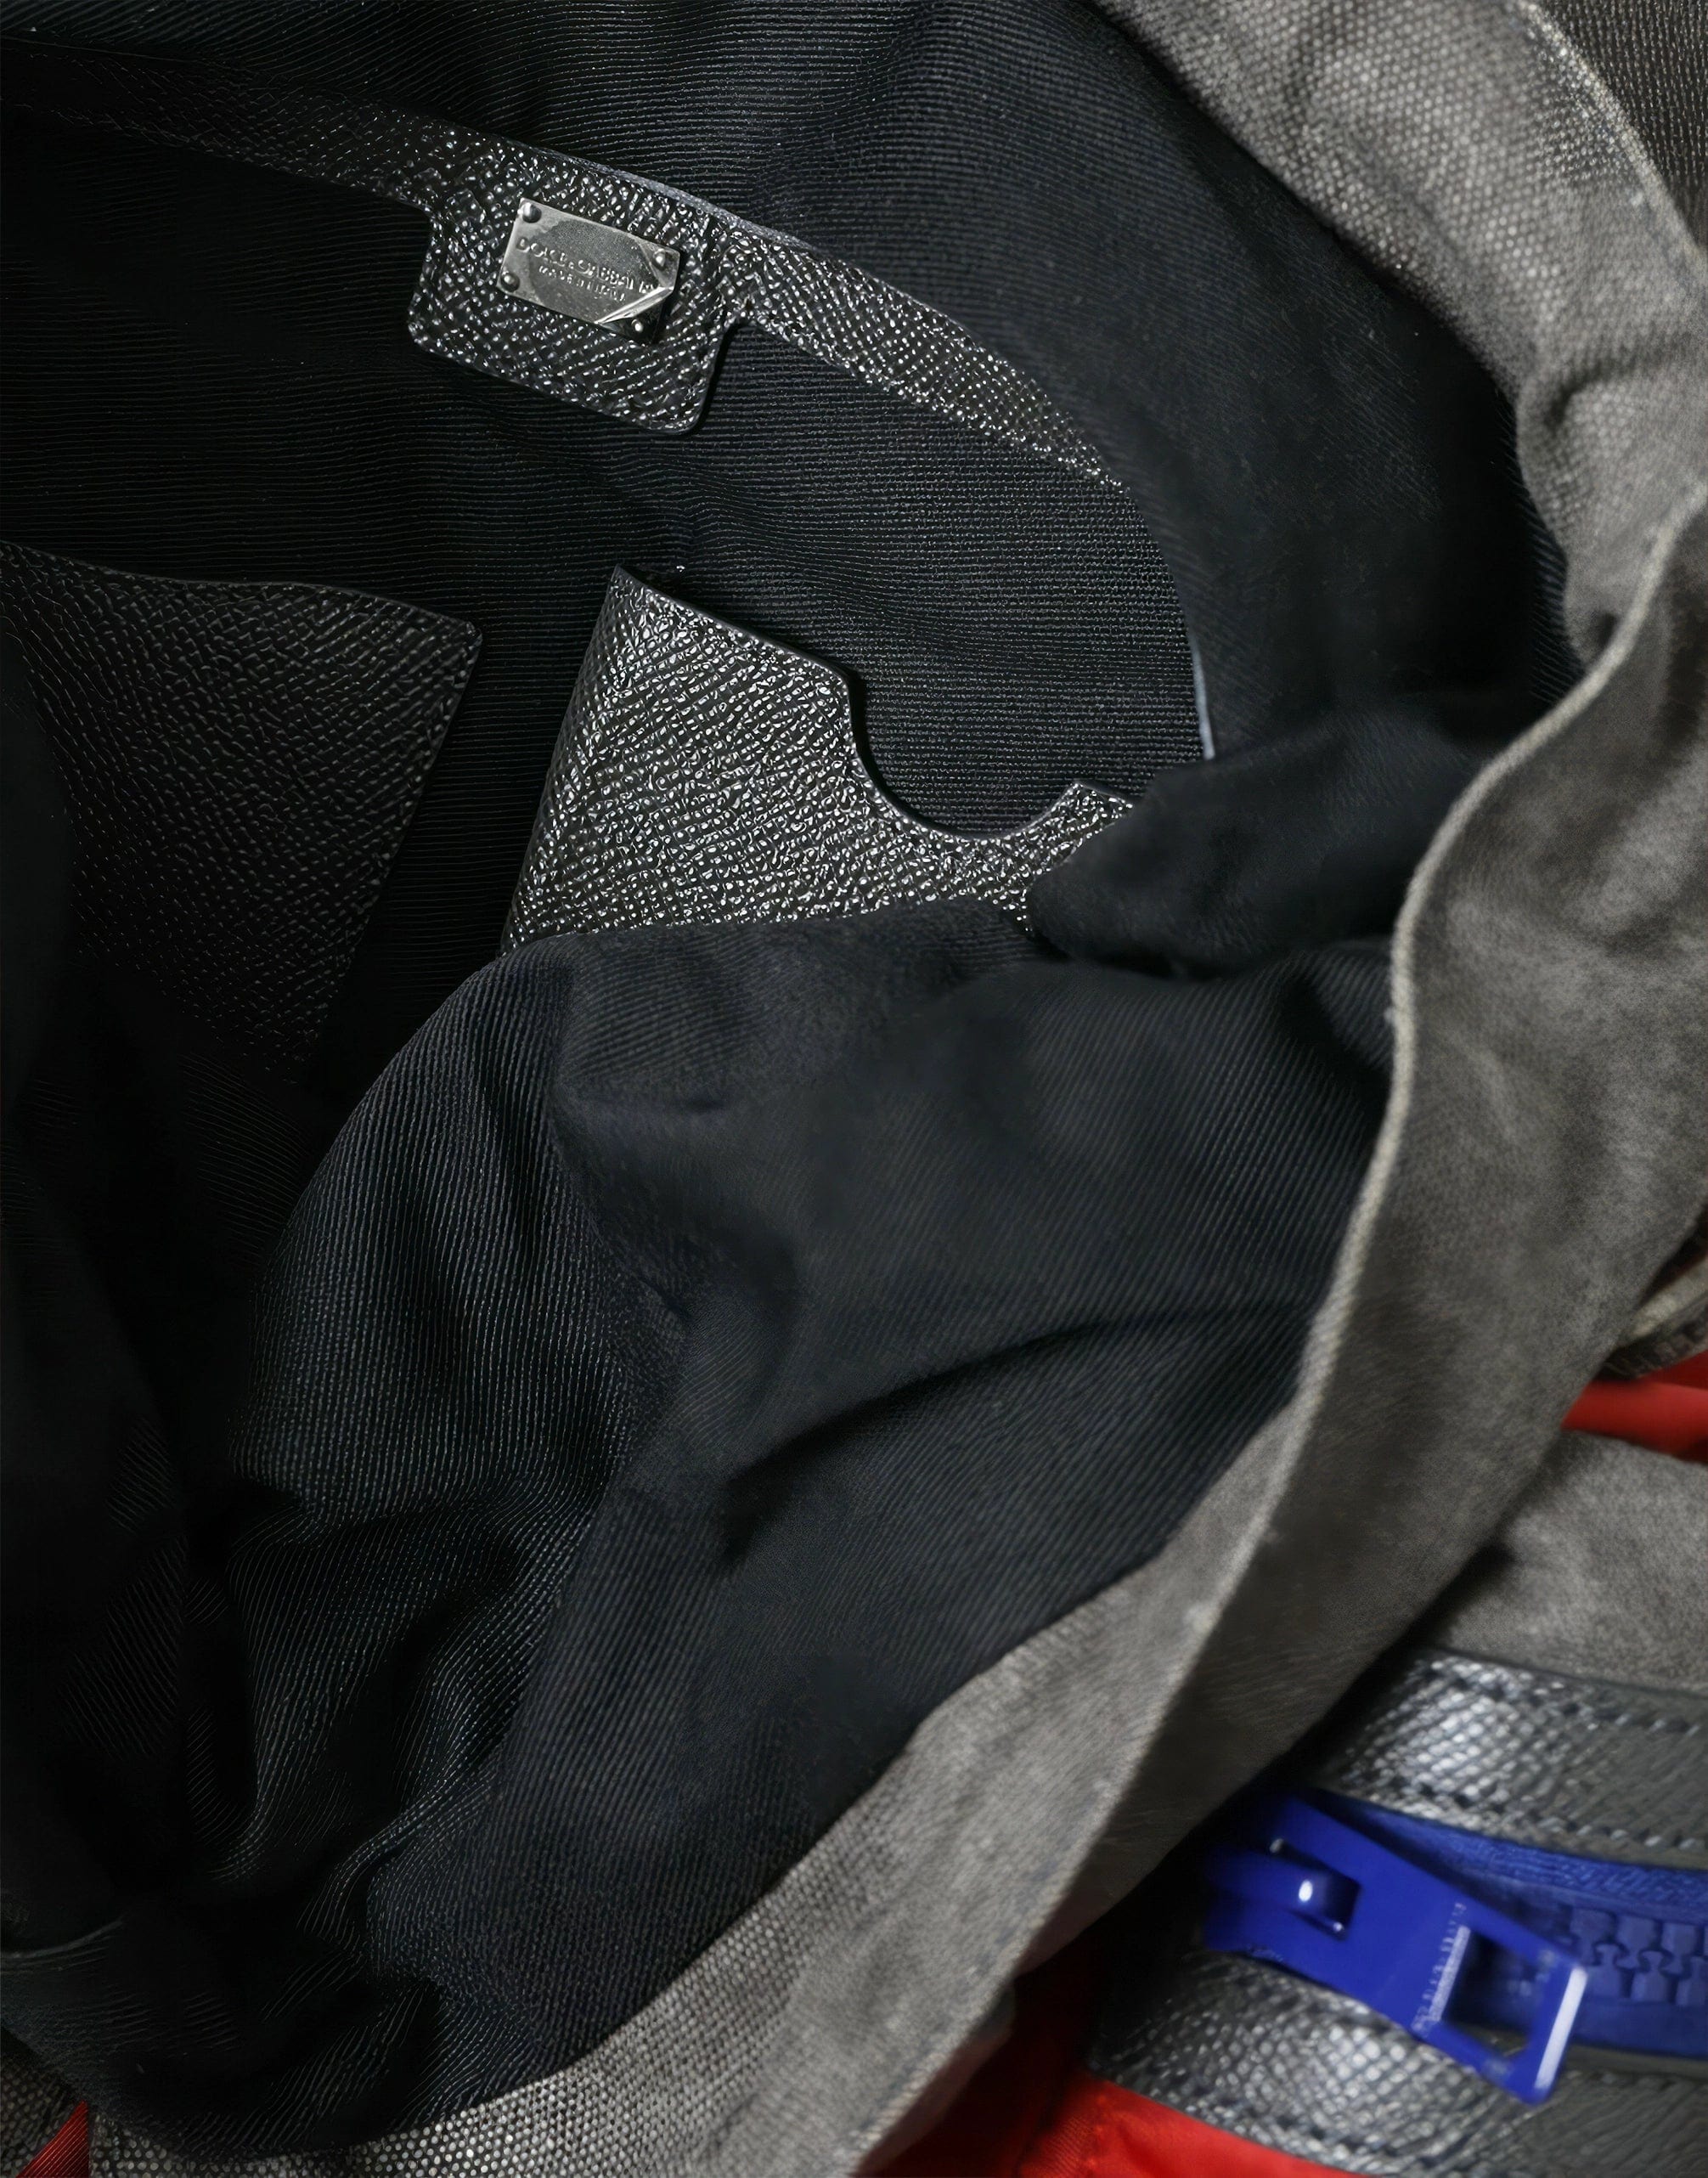 Mixed-Materials Rucksack Backpack